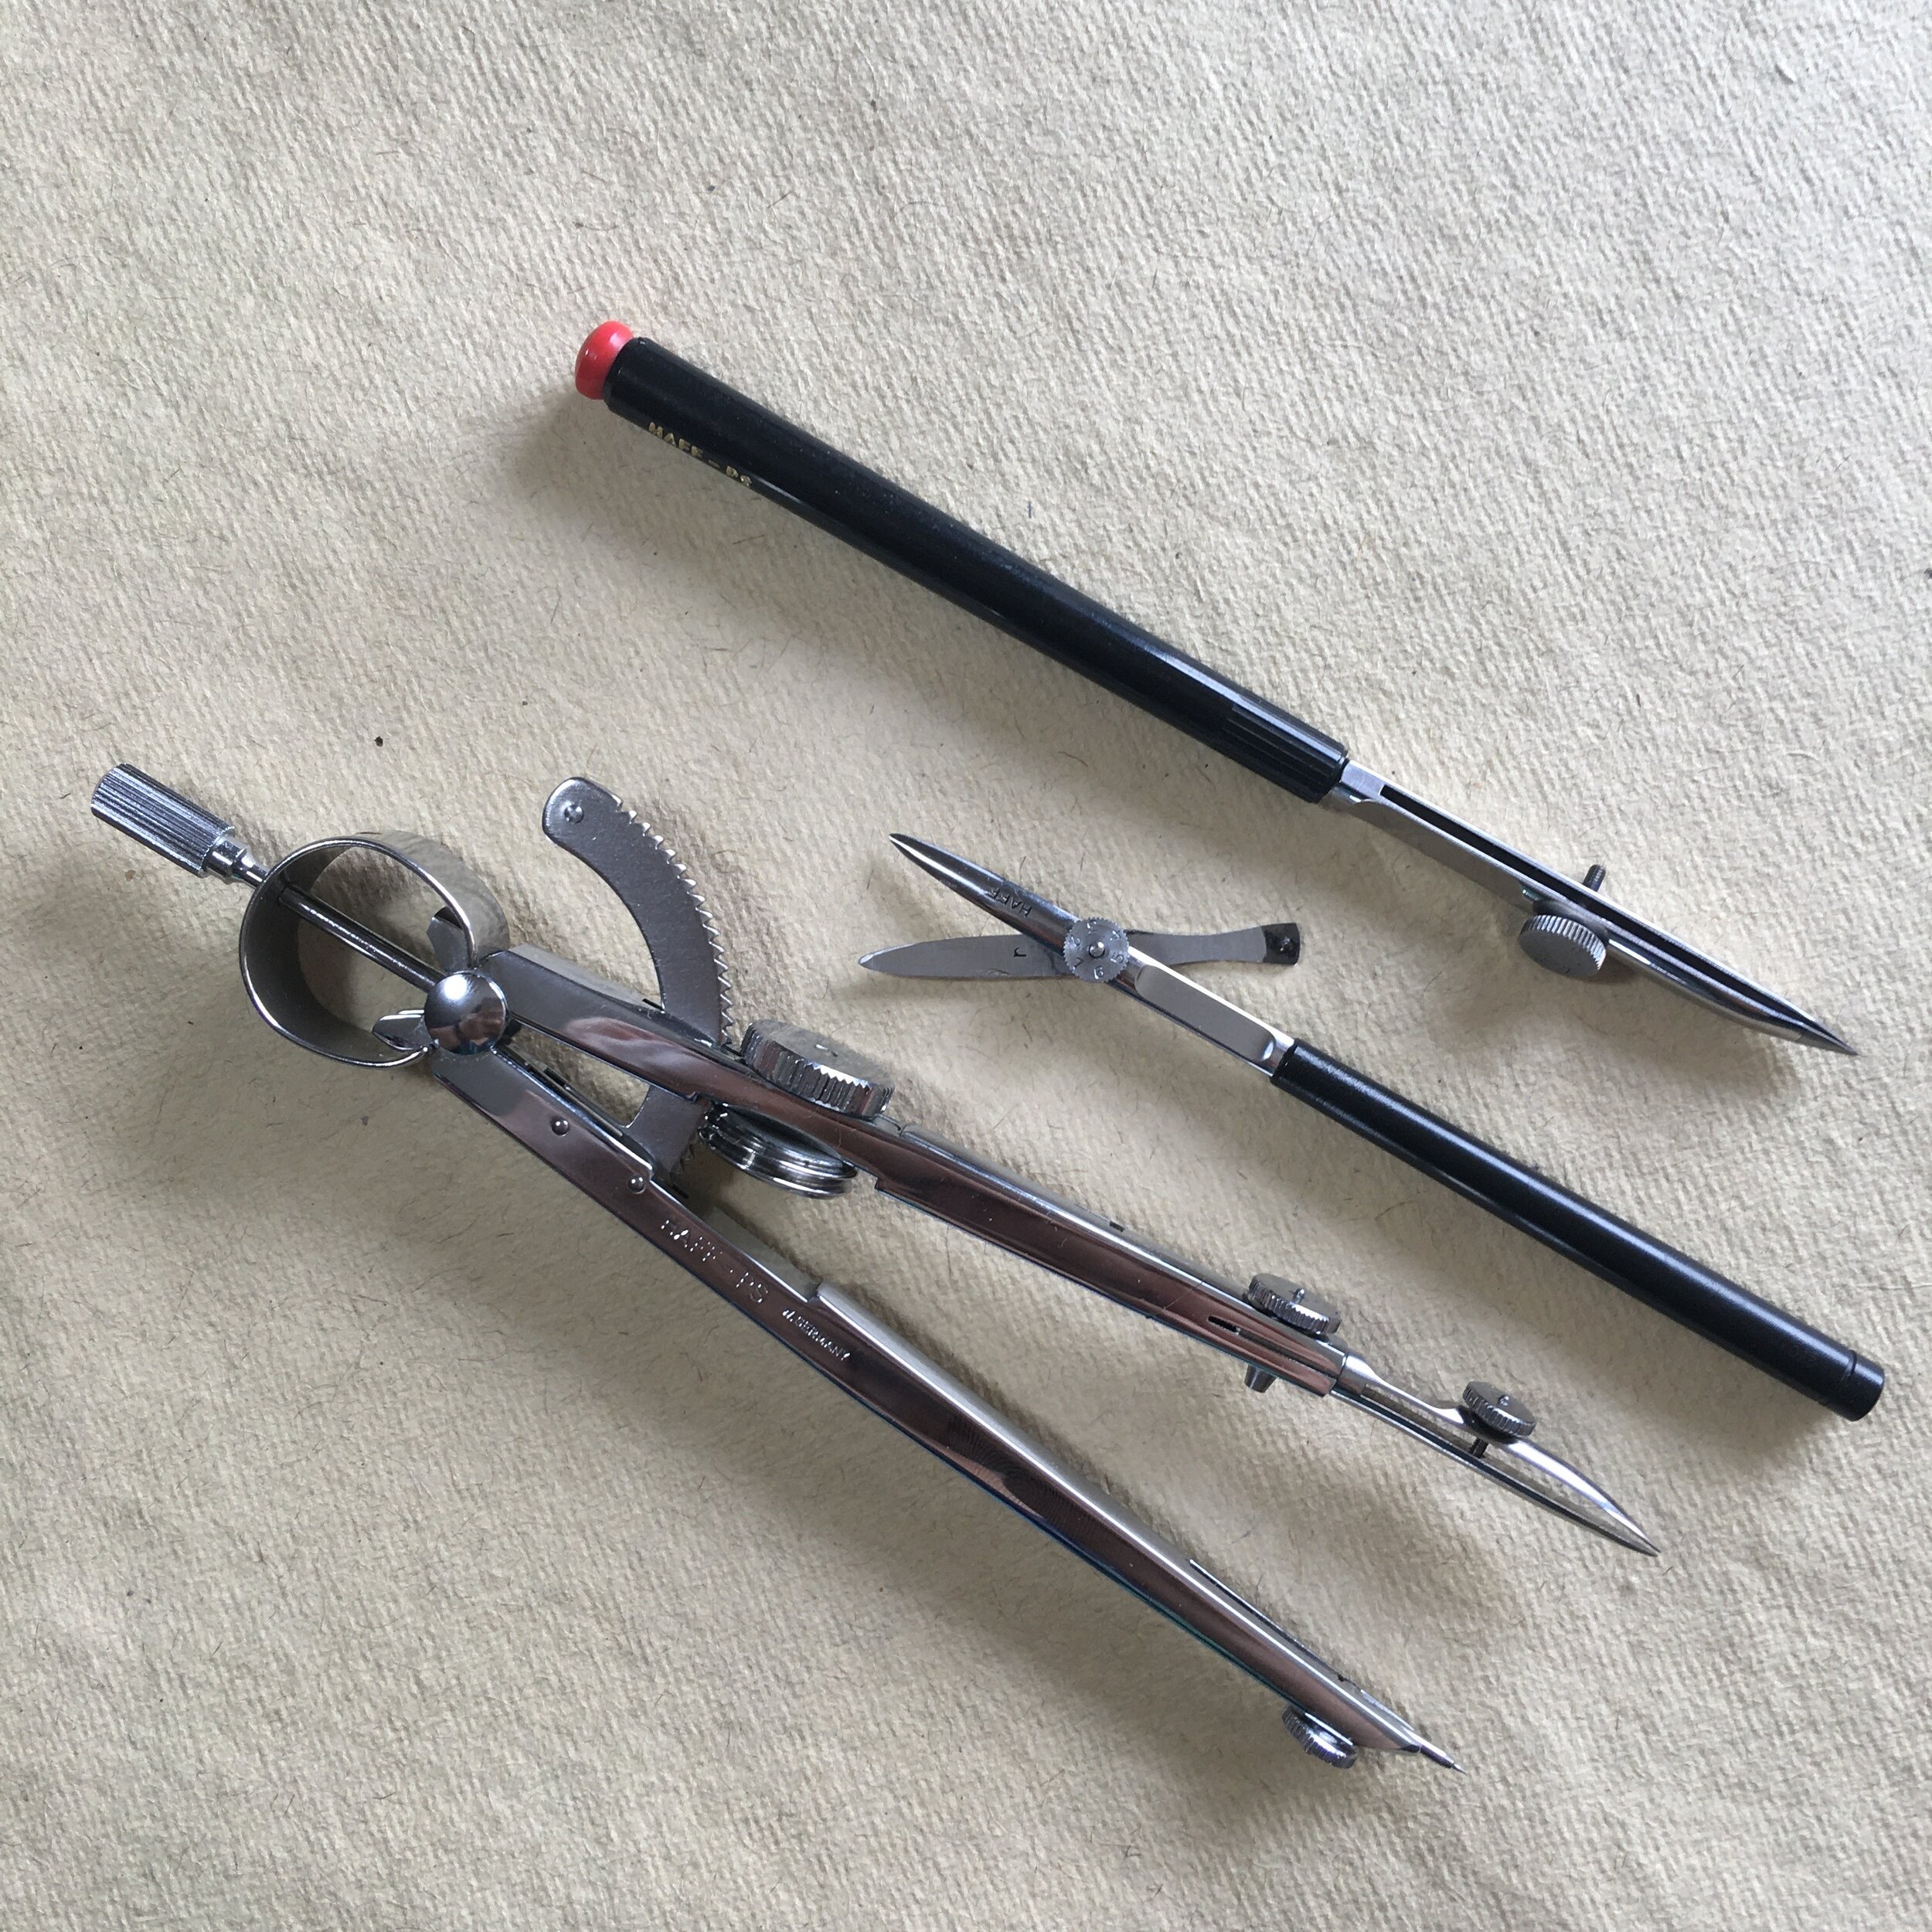  8 Pieces Art Ruling Pen Set Masking Fluid Pen with